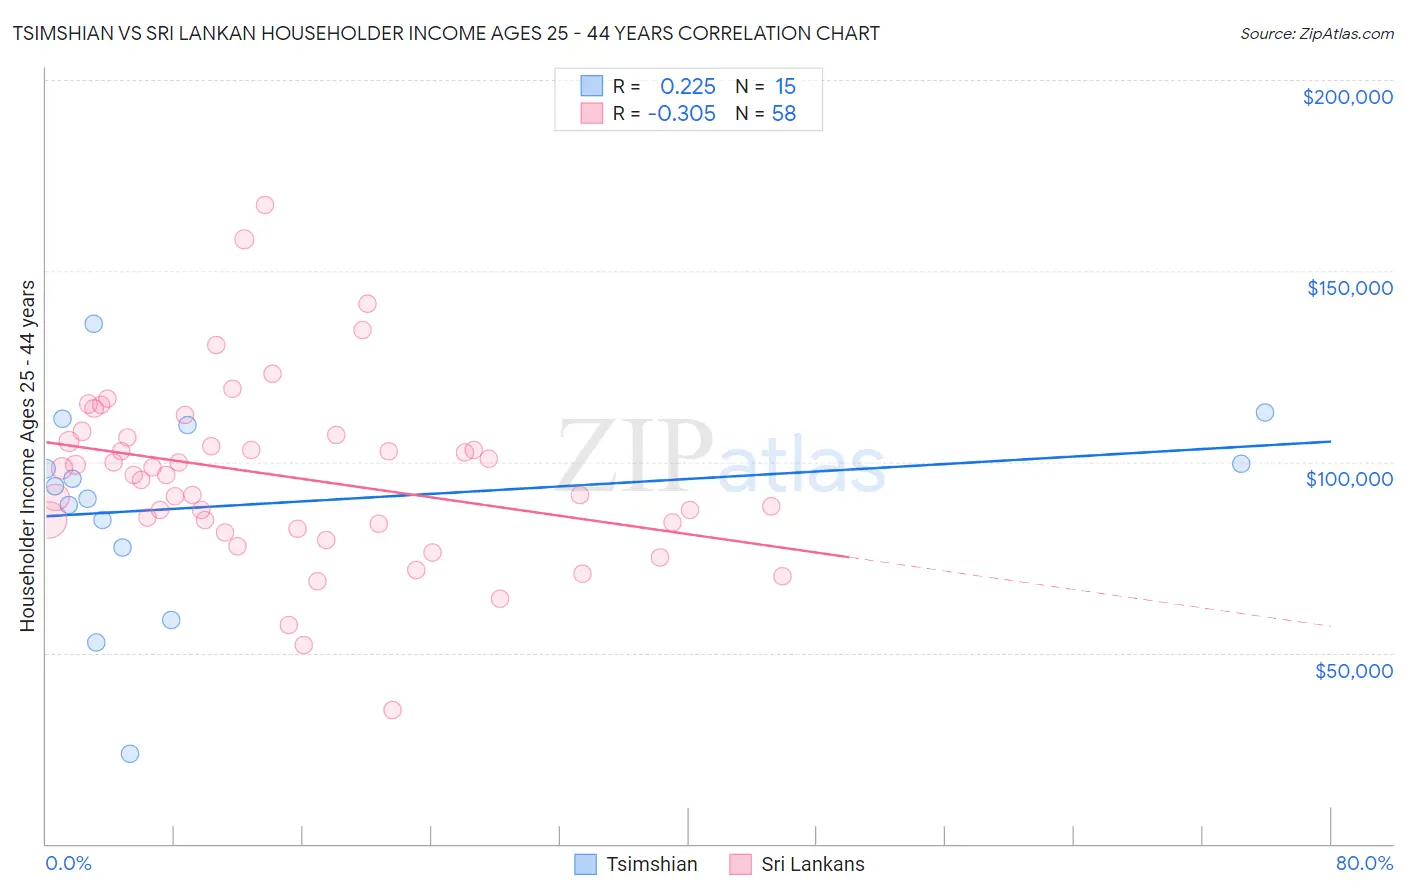 Tsimshian vs Sri Lankan Householder Income Ages 25 - 44 years